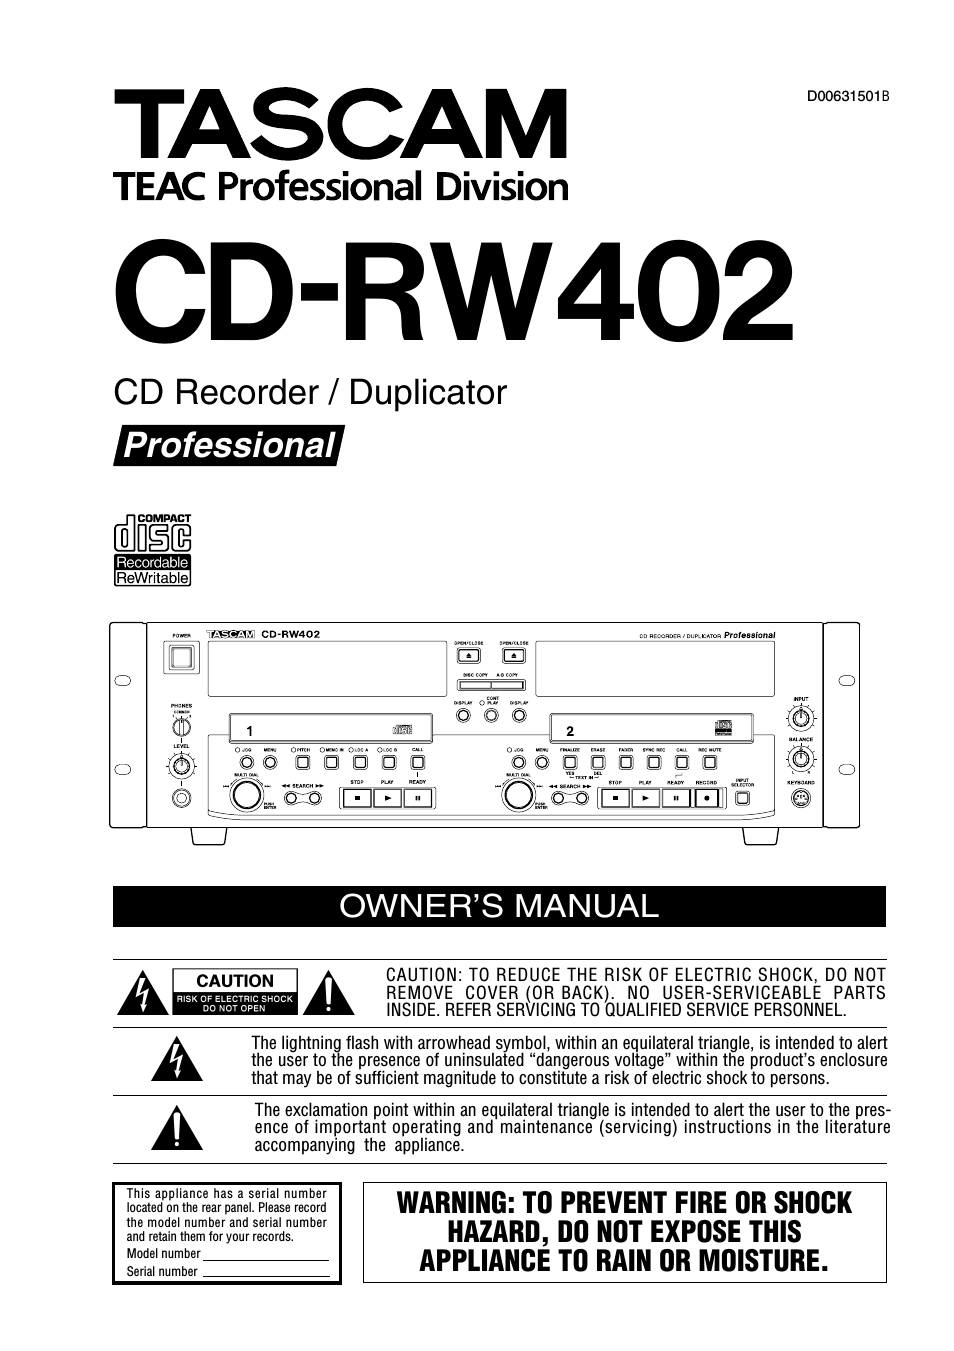 CD-RW402